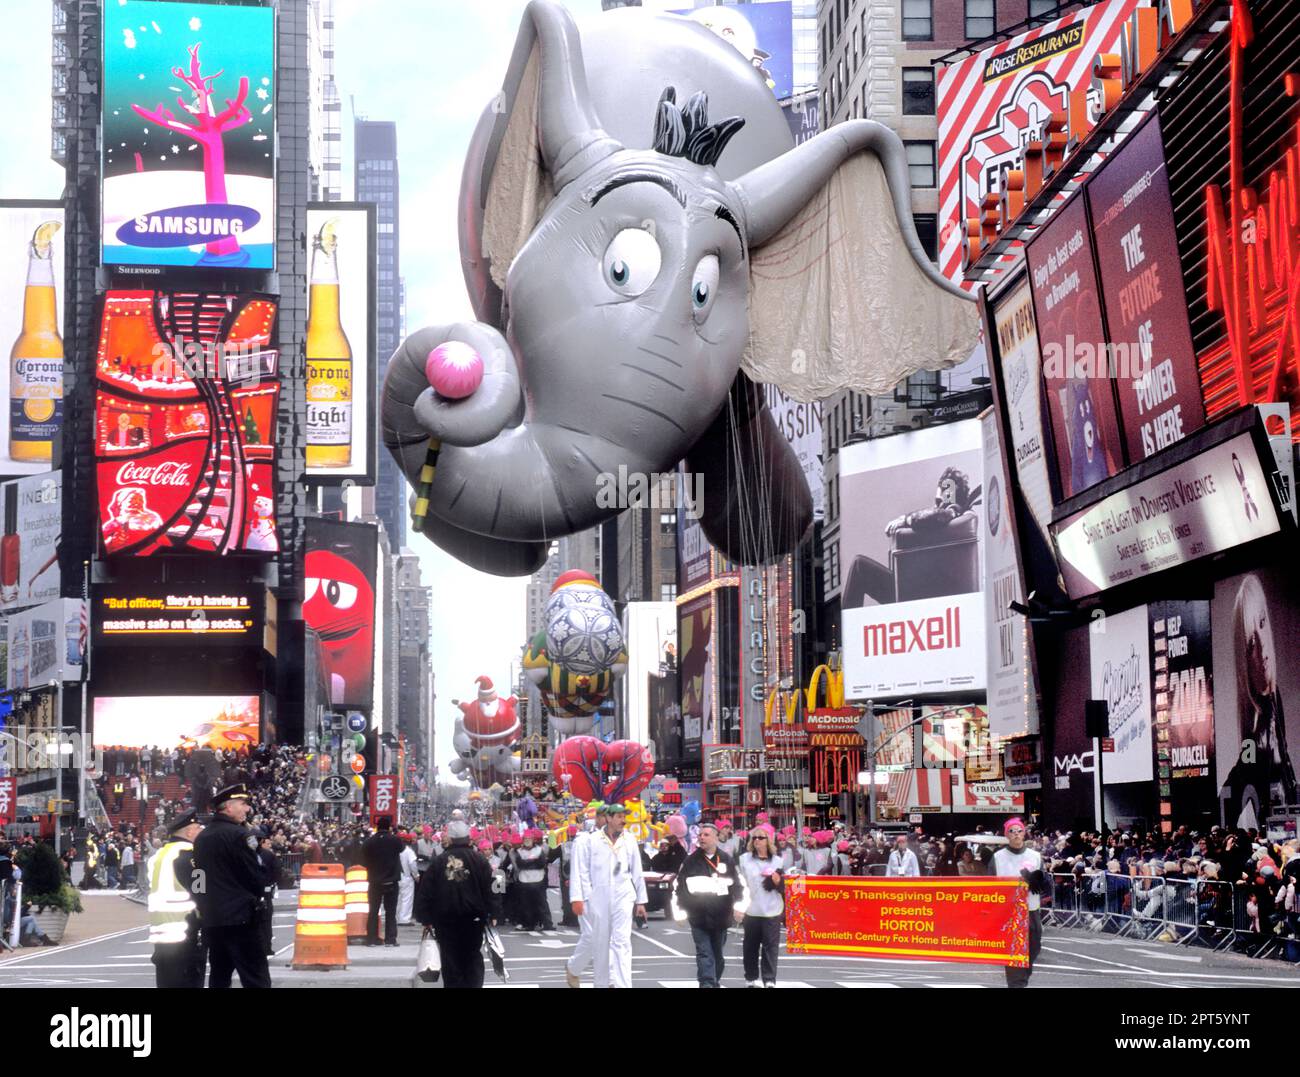 Macy's Thanksgiving Day Parade New York City Horton the Elephant balloon. Folle per strada. Times Square e Broadway USA. Tradizione americana Foto Stock